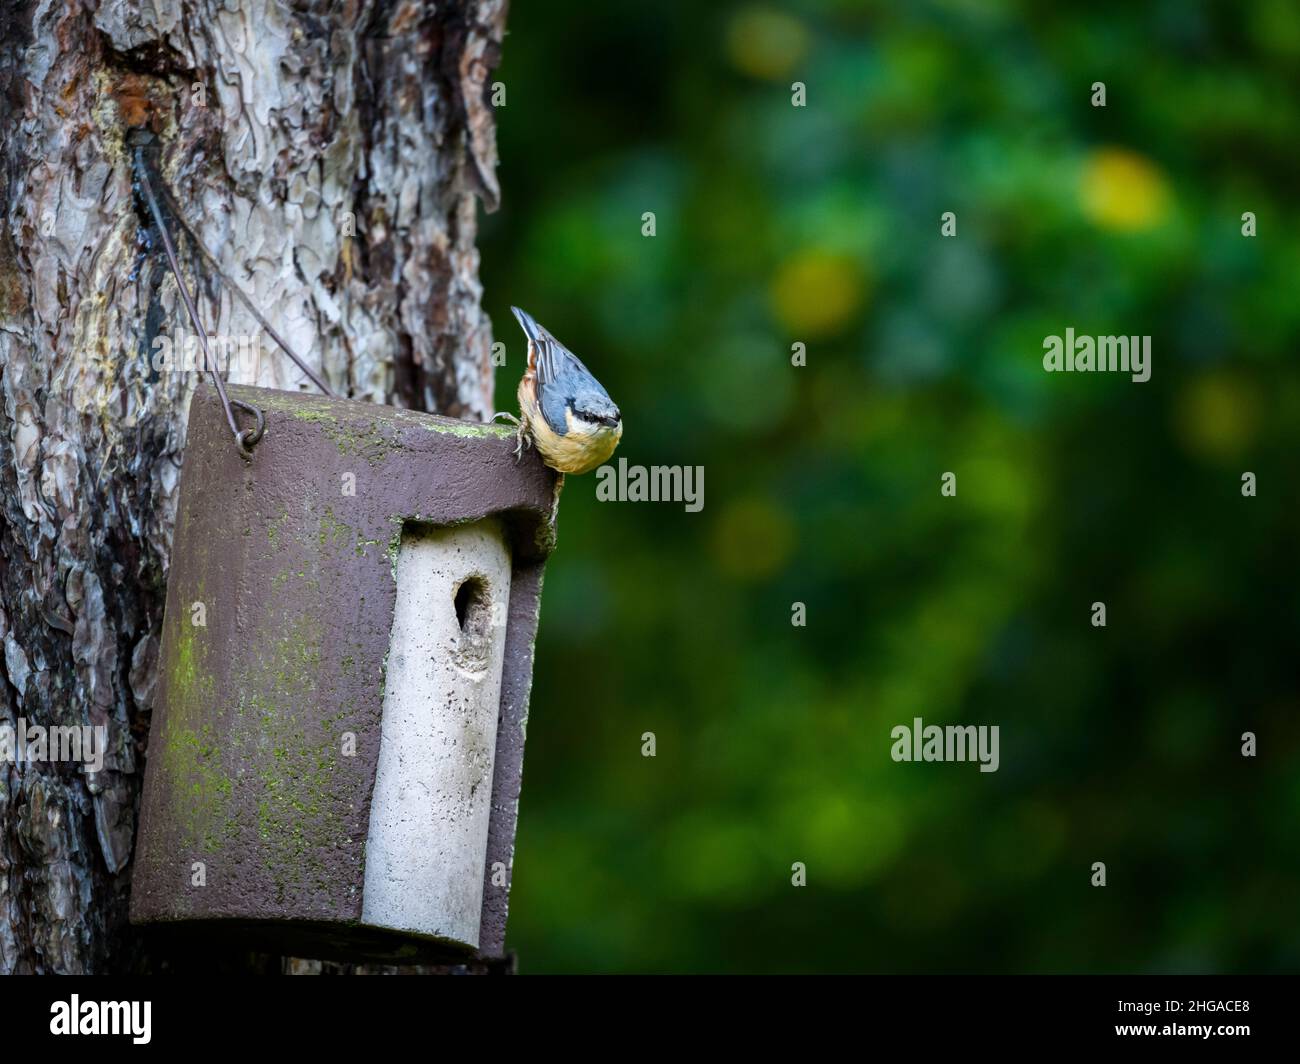 Close-up of single, small nuthatch (garden bird) clinging to tree-hanging nest box by entrance hole (eye-stripe & beak) - West Yorkshire, England, UK. Stock Photo